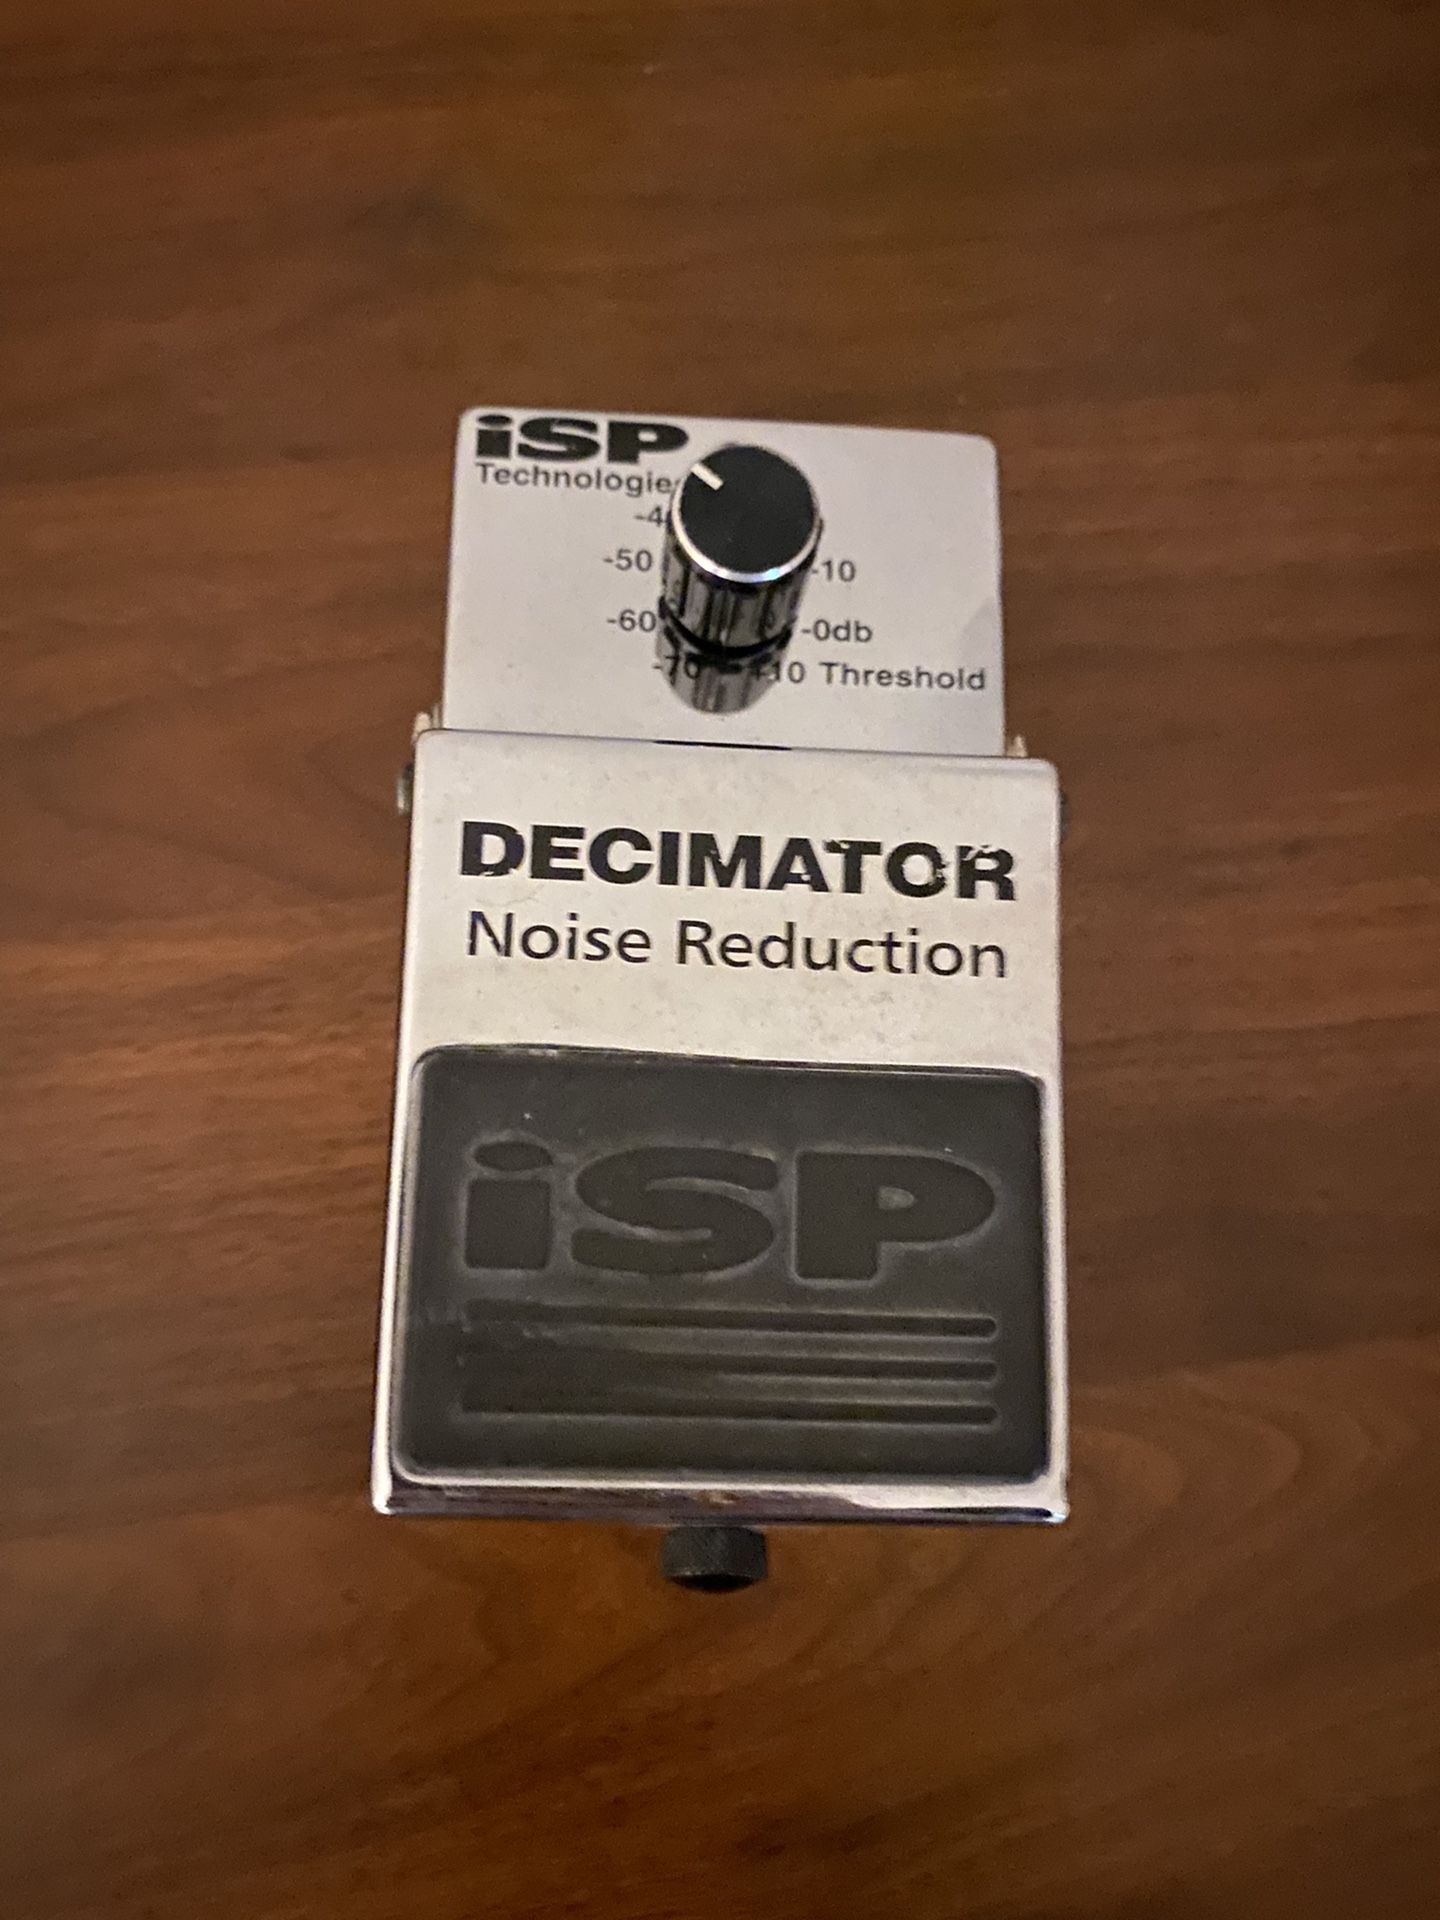 Isp decimator noise reduction